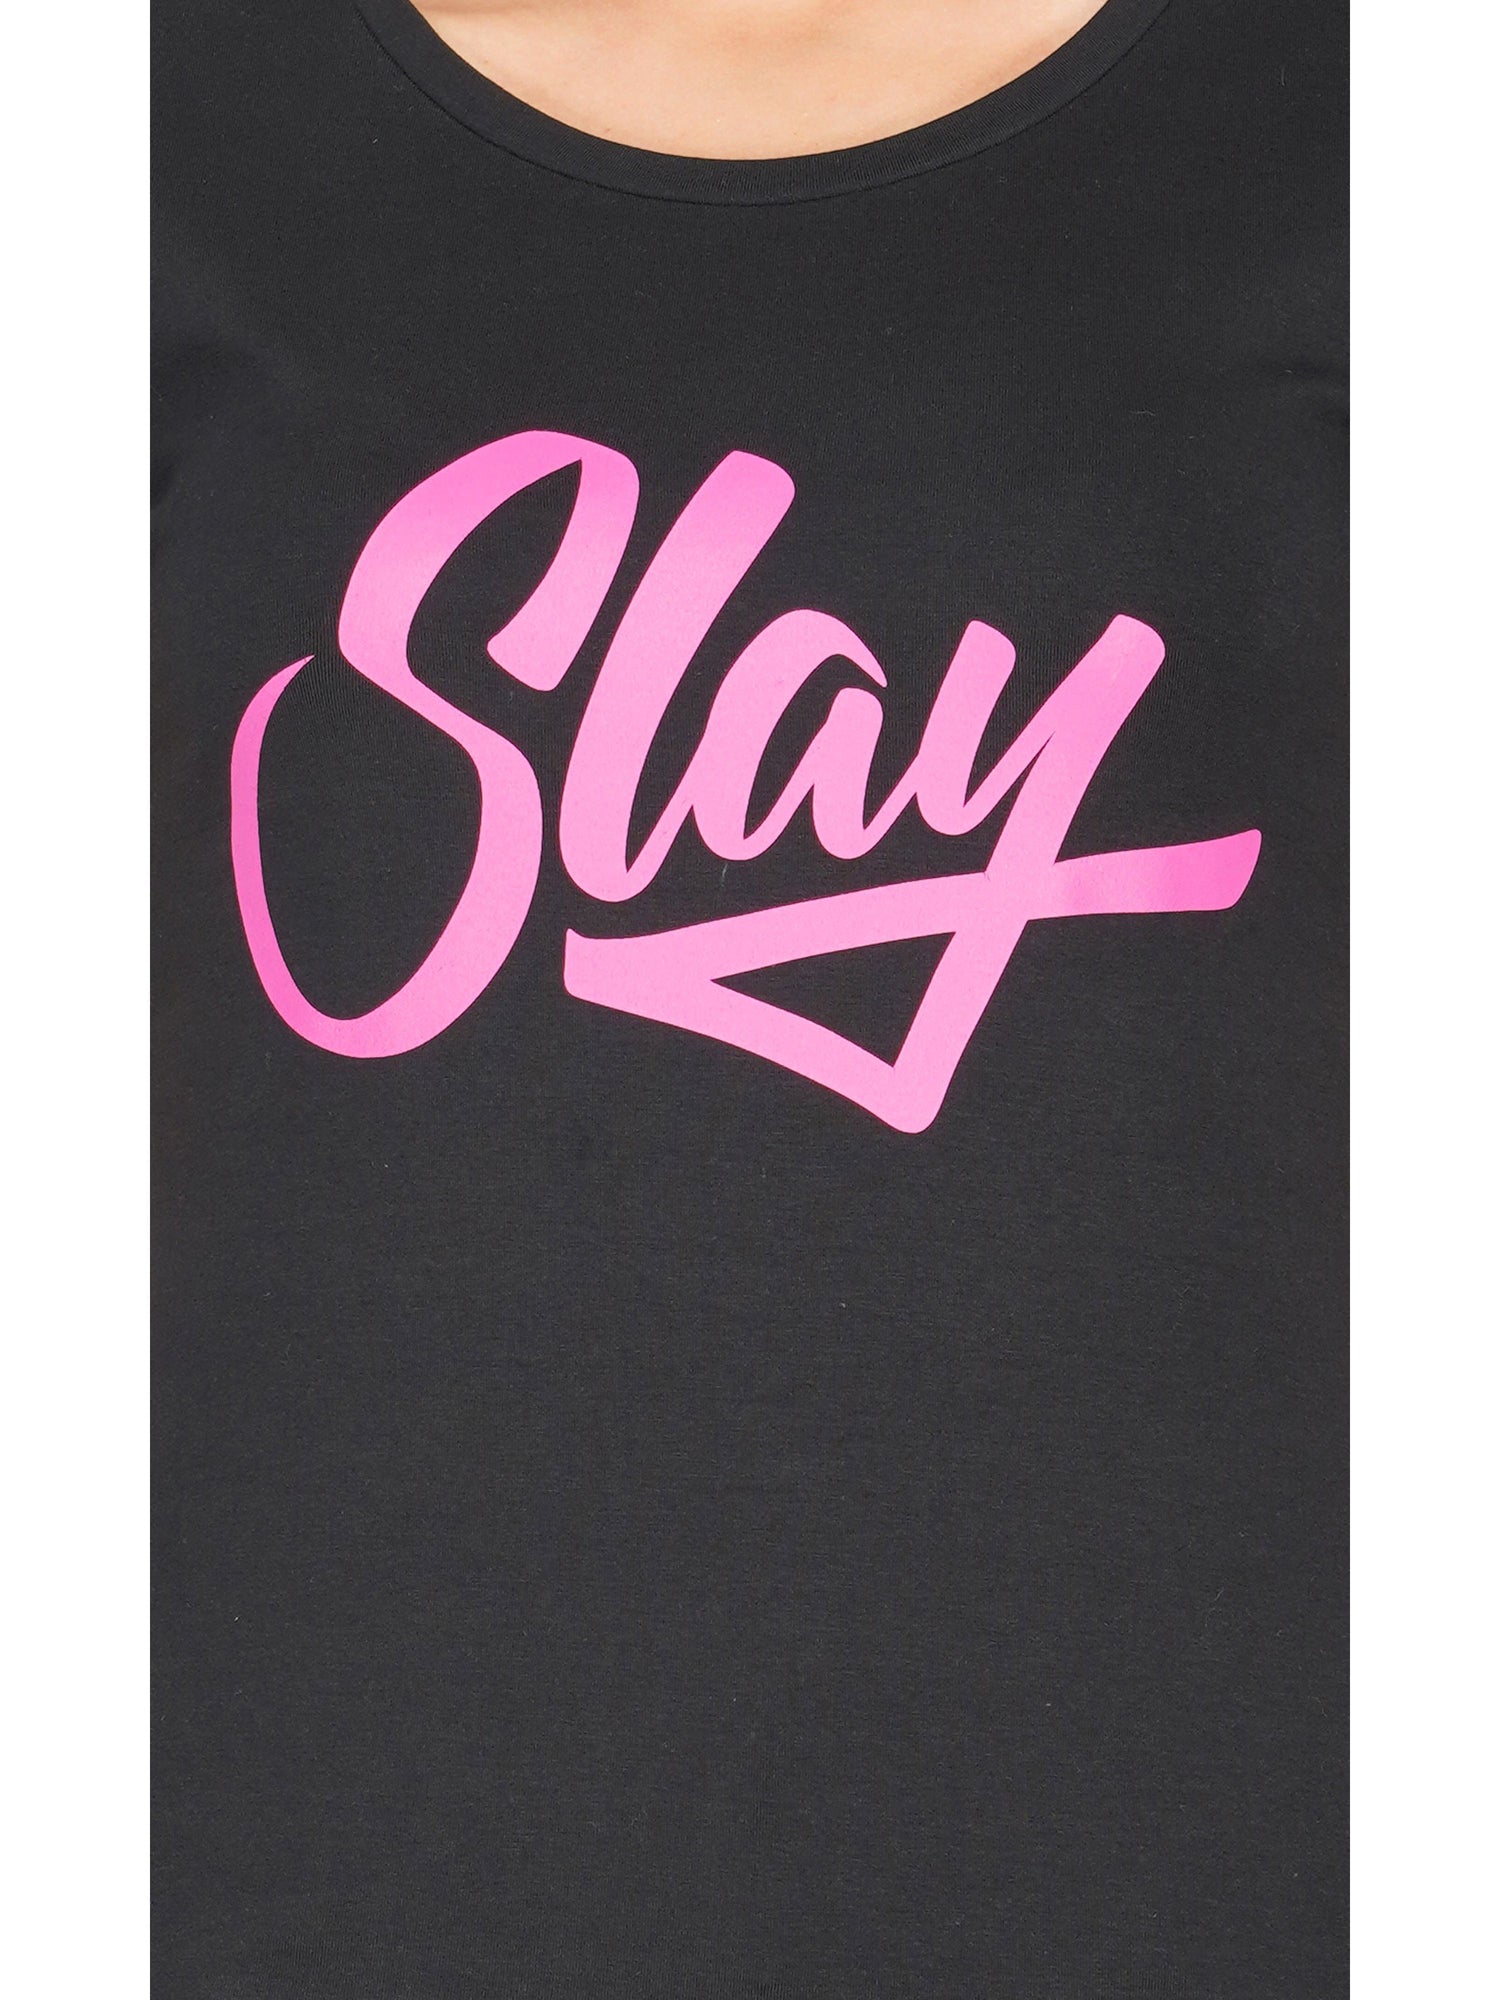 SLAY. Sport Women's Dark Pink Printed T-shirt-clothing-to-slay.myshopify.com-Print T-Shirt